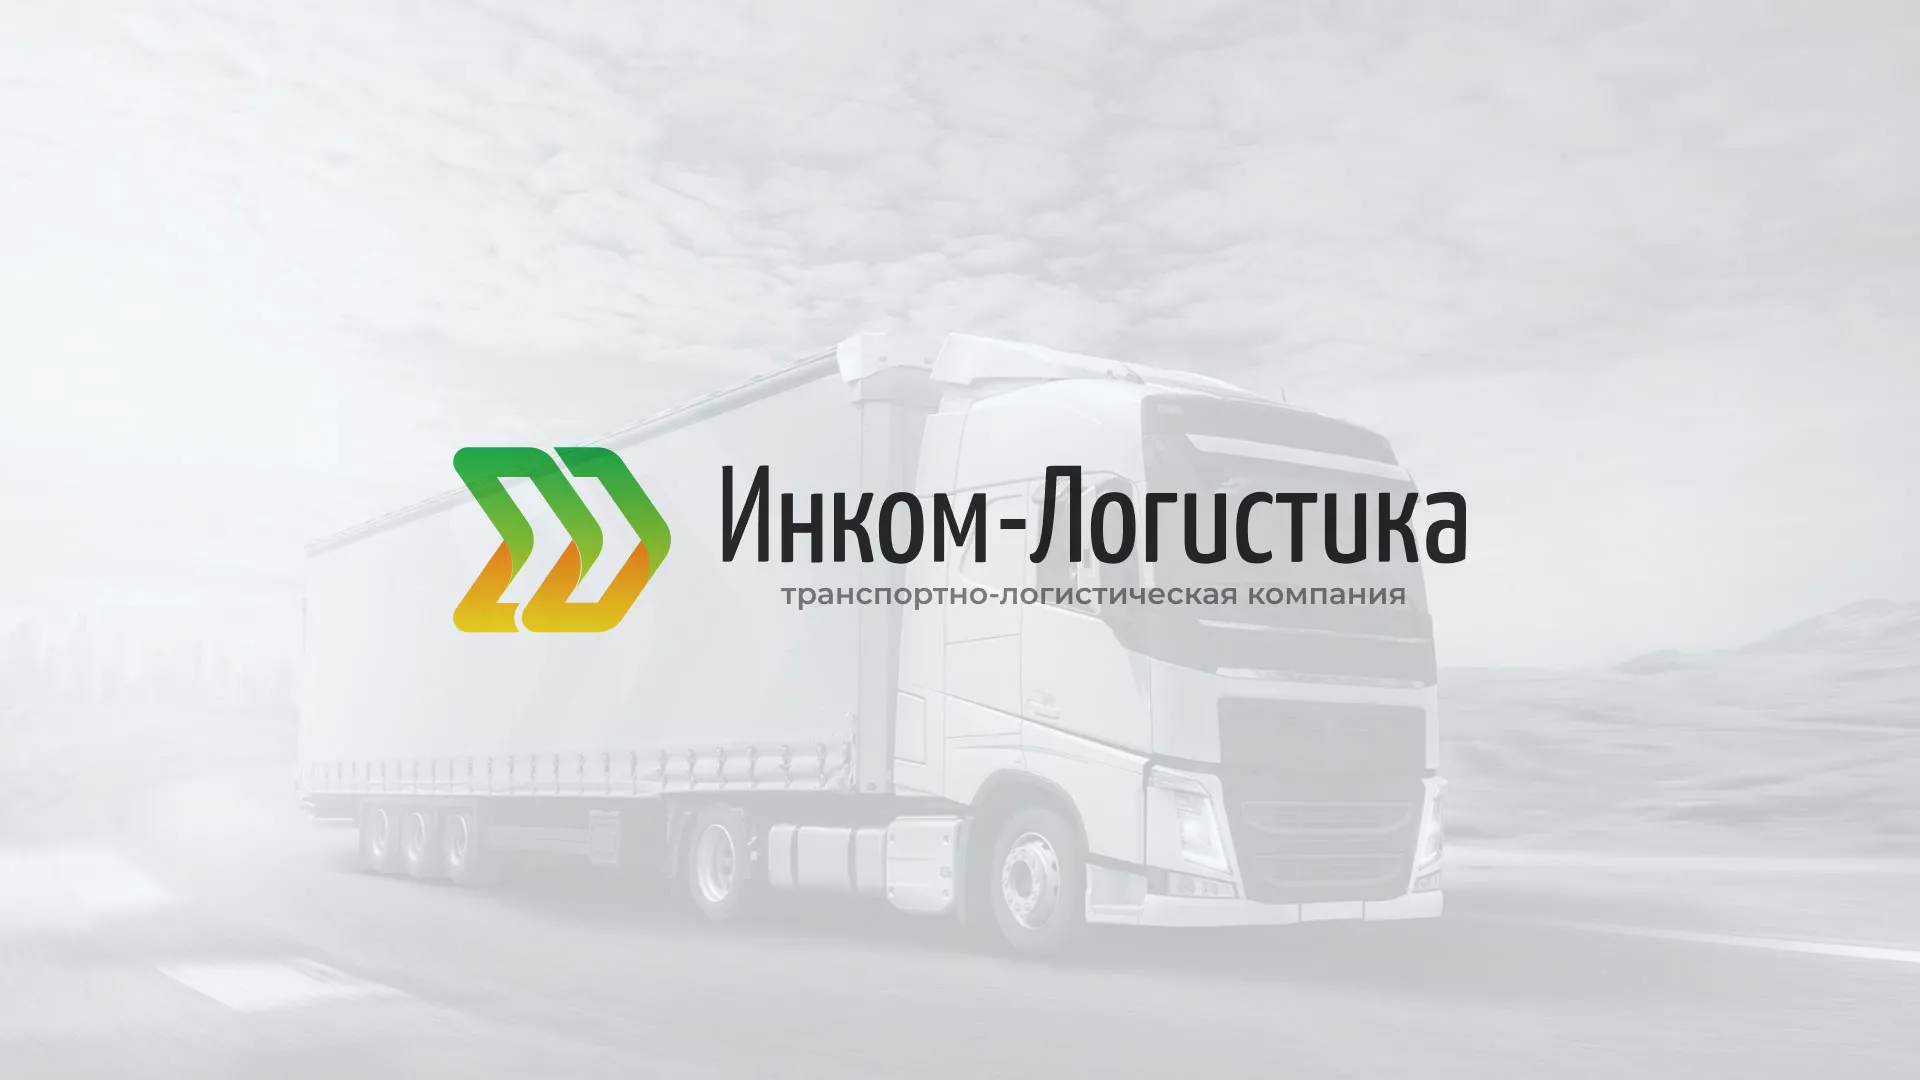 Разработка логотипа и сайта компании «Инком-Логистика» в Щербинке